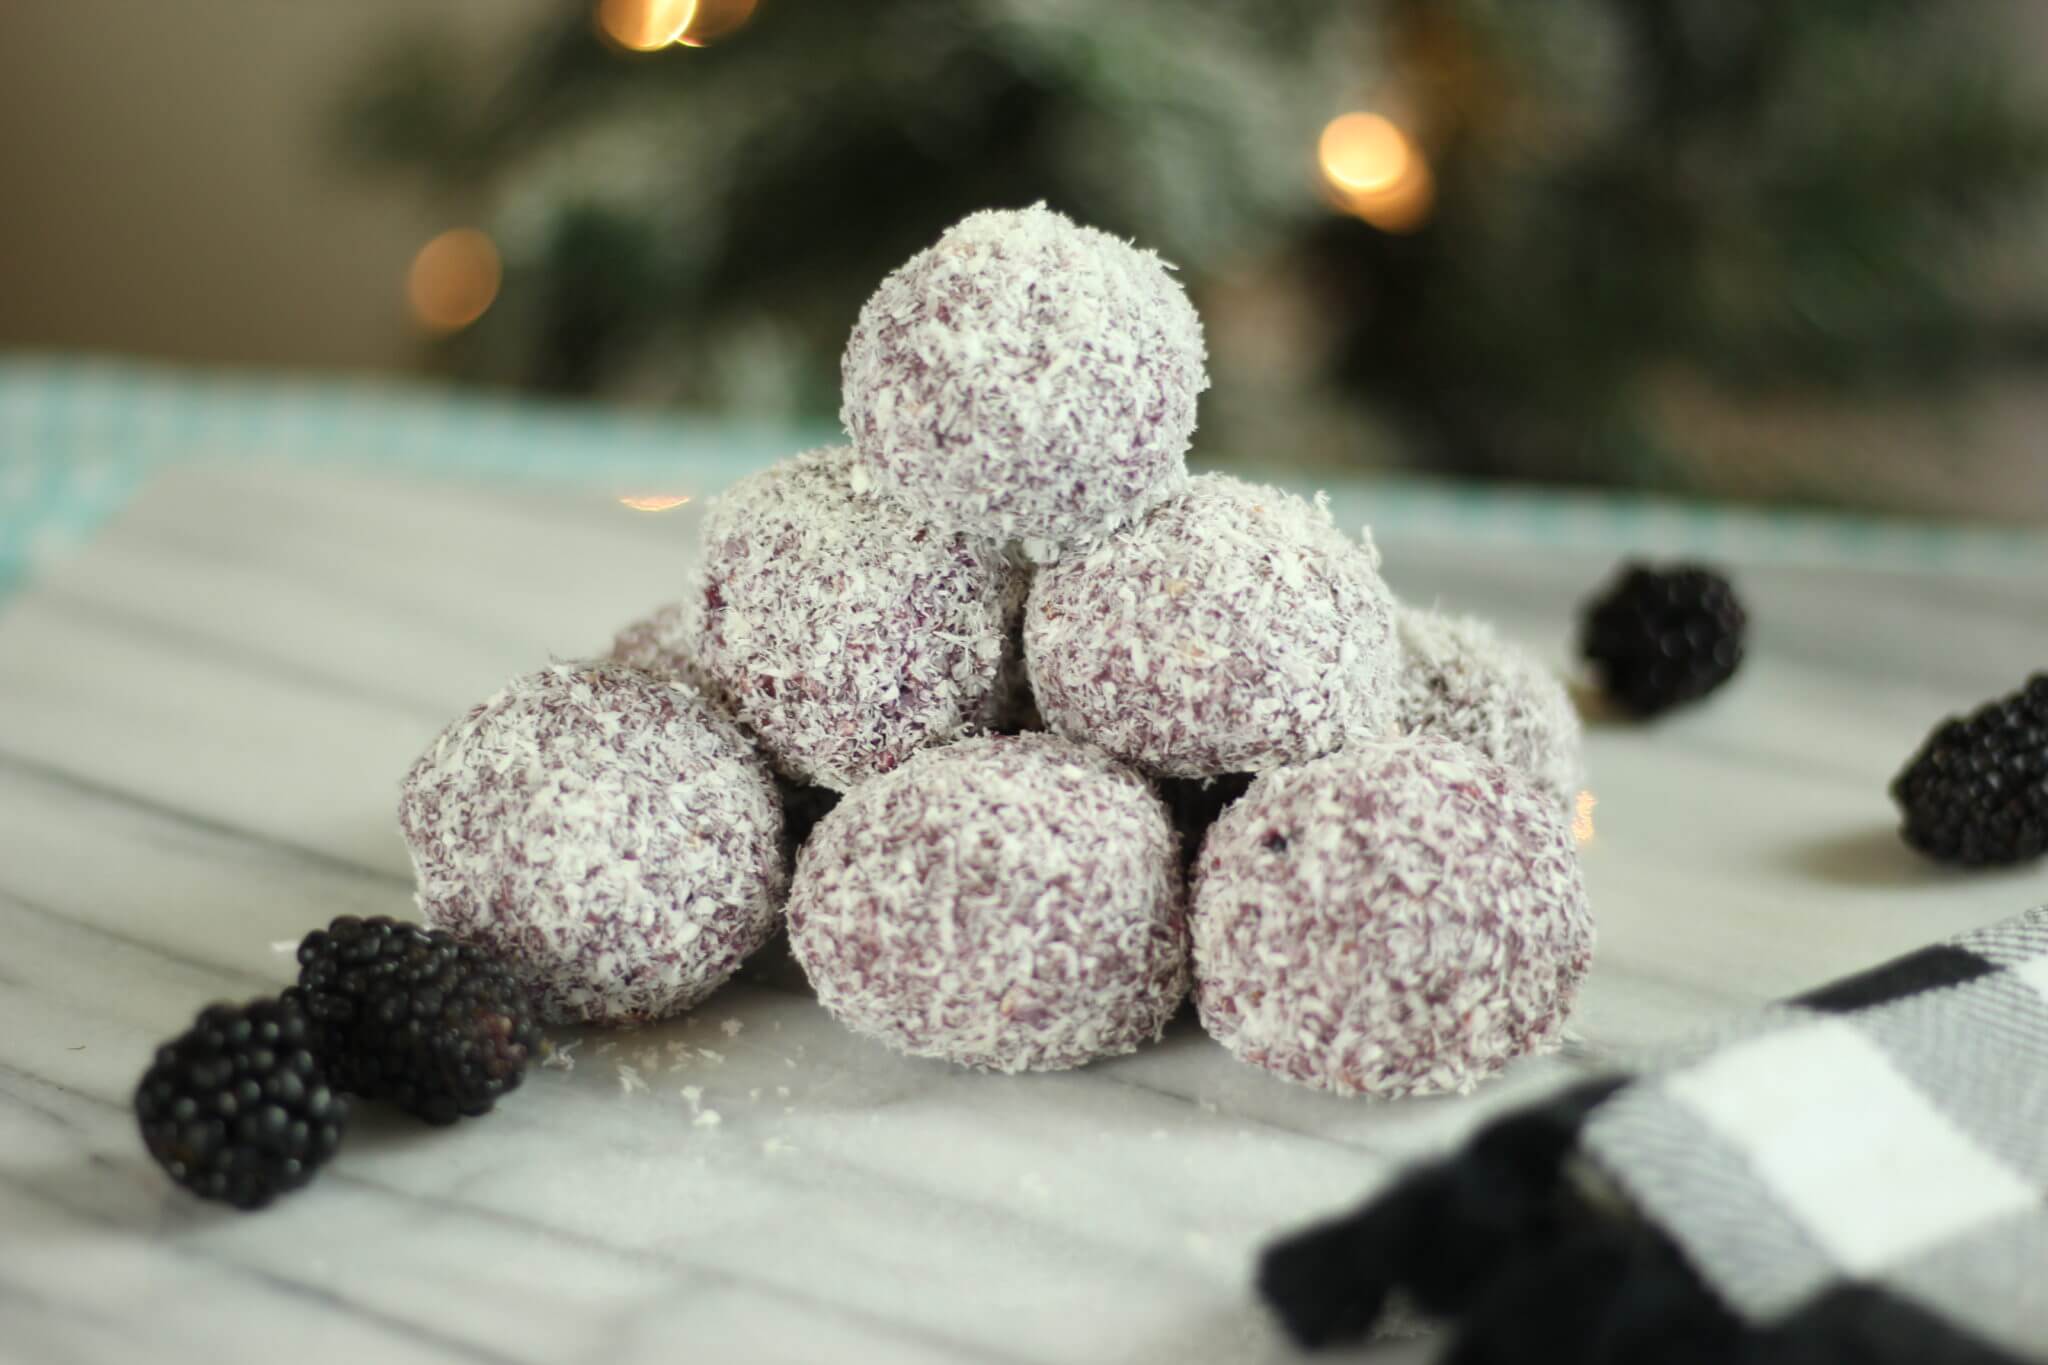 Blackberry Snowballs